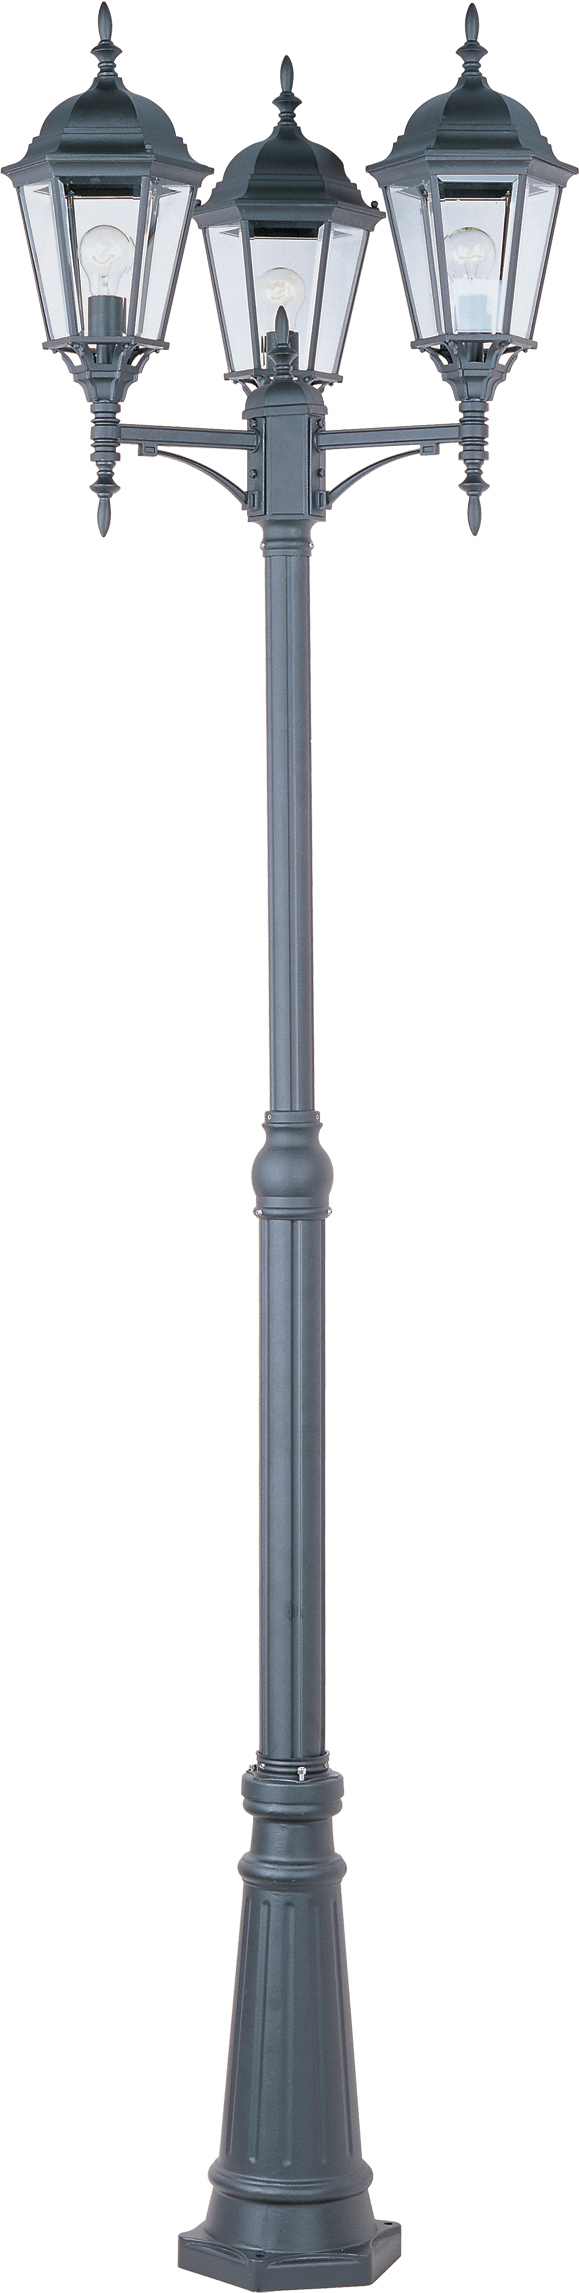 3-Light Outdoor Post Lantern | Maxim Lighting